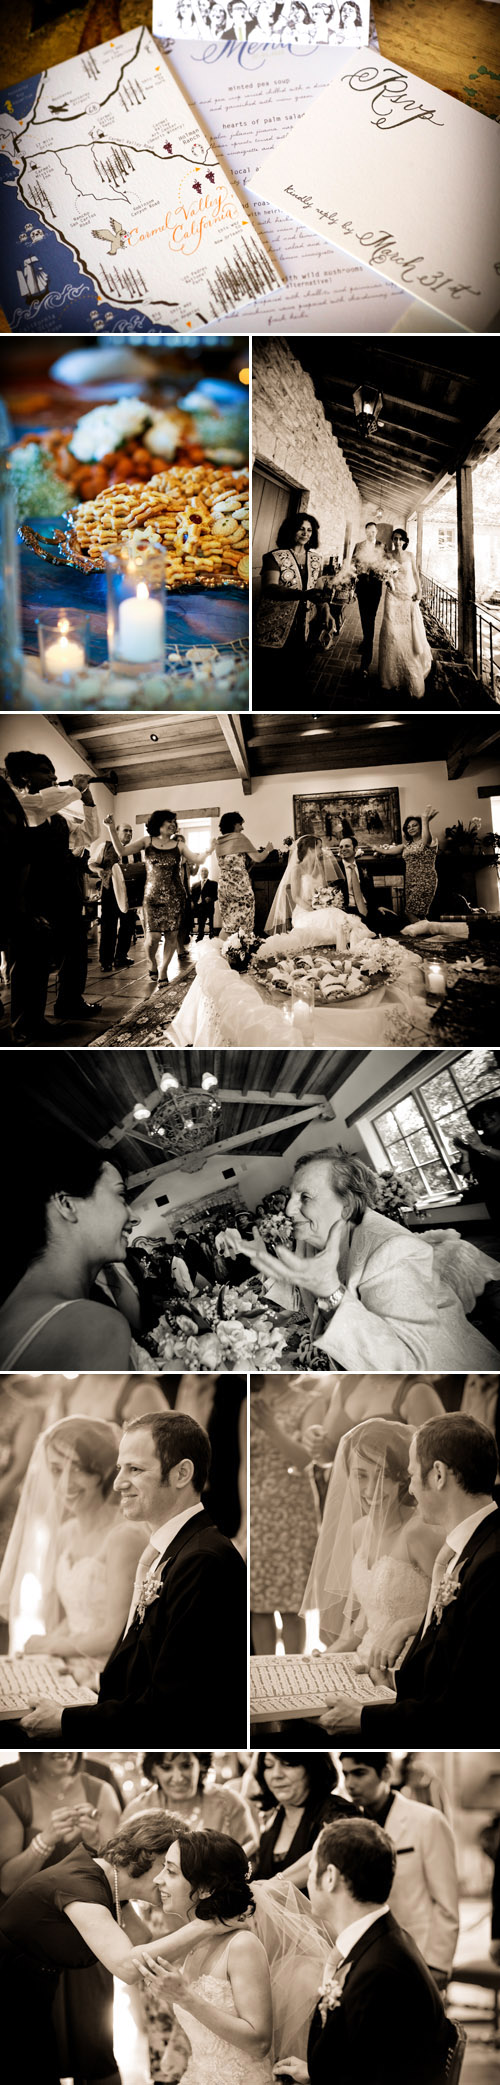 Persian and Western real wedding at Carmel Valley's Holman Ranch, photos by Alisha and Brook Photography